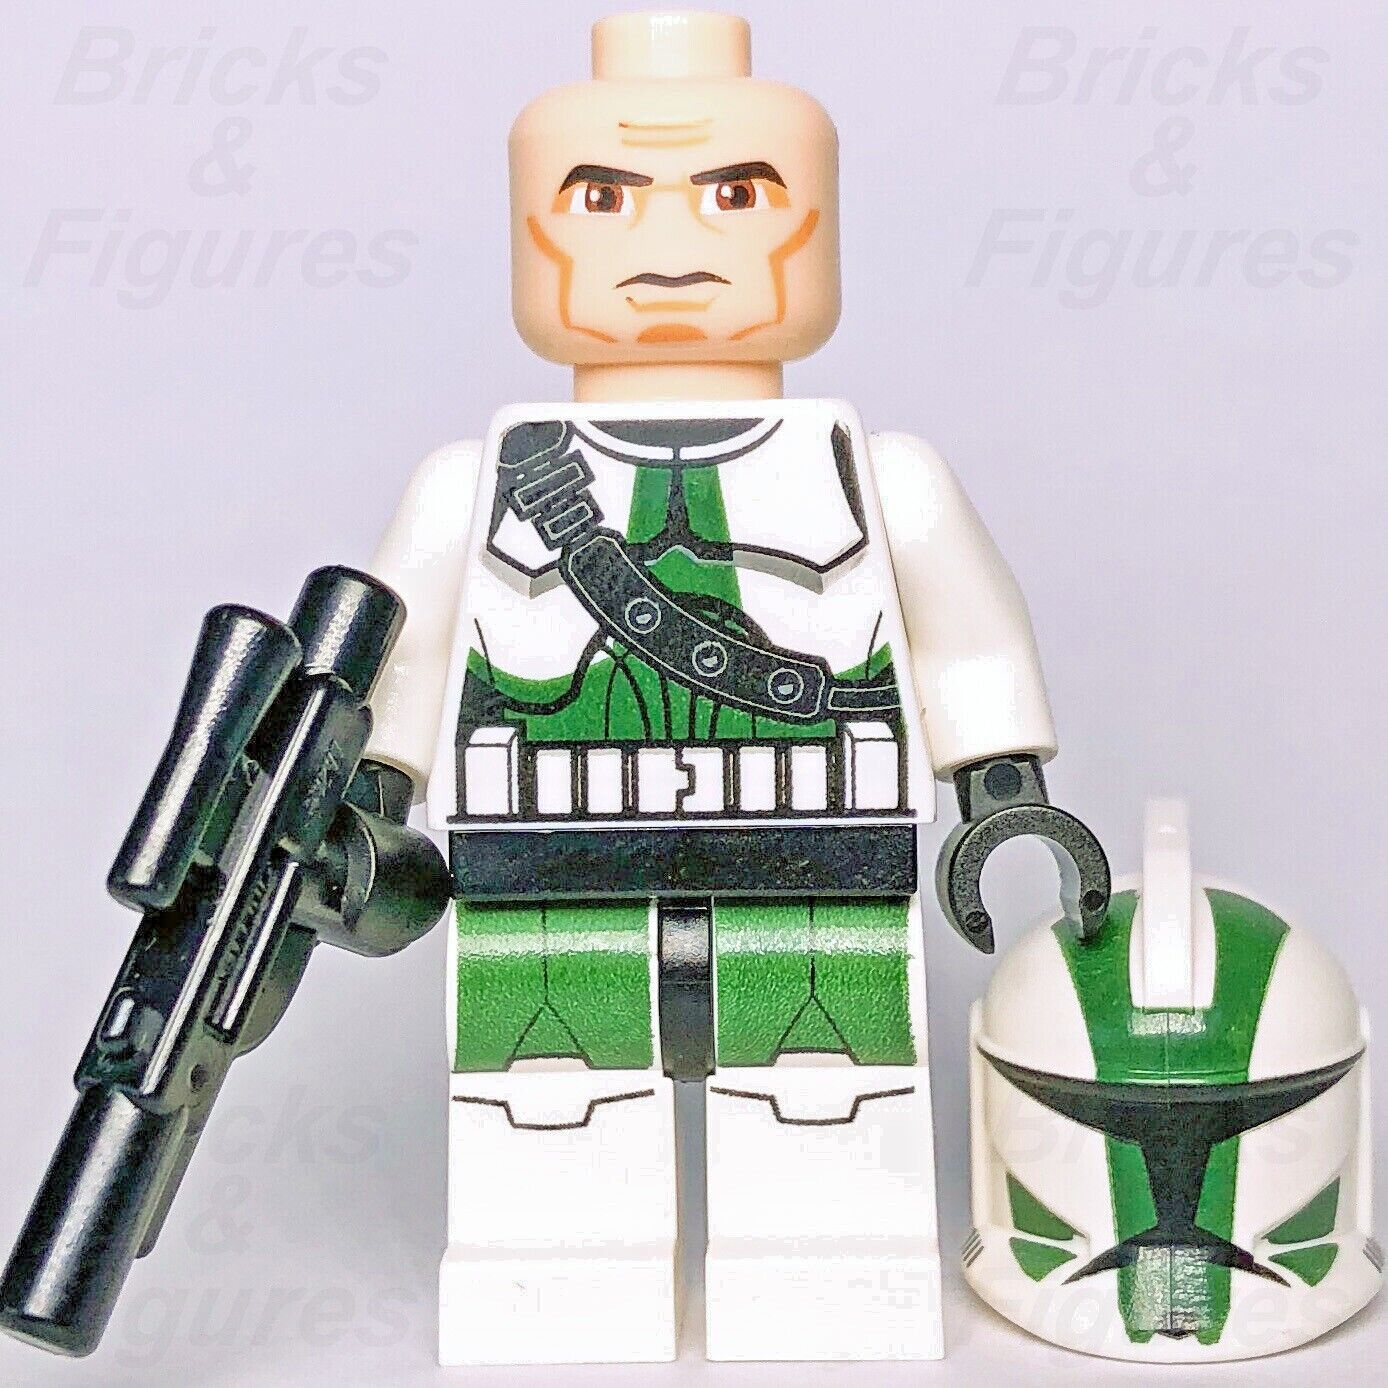 Lego Clone Trooper 7913 Sand Green Markings Star Wars Clone Wars Minifigure